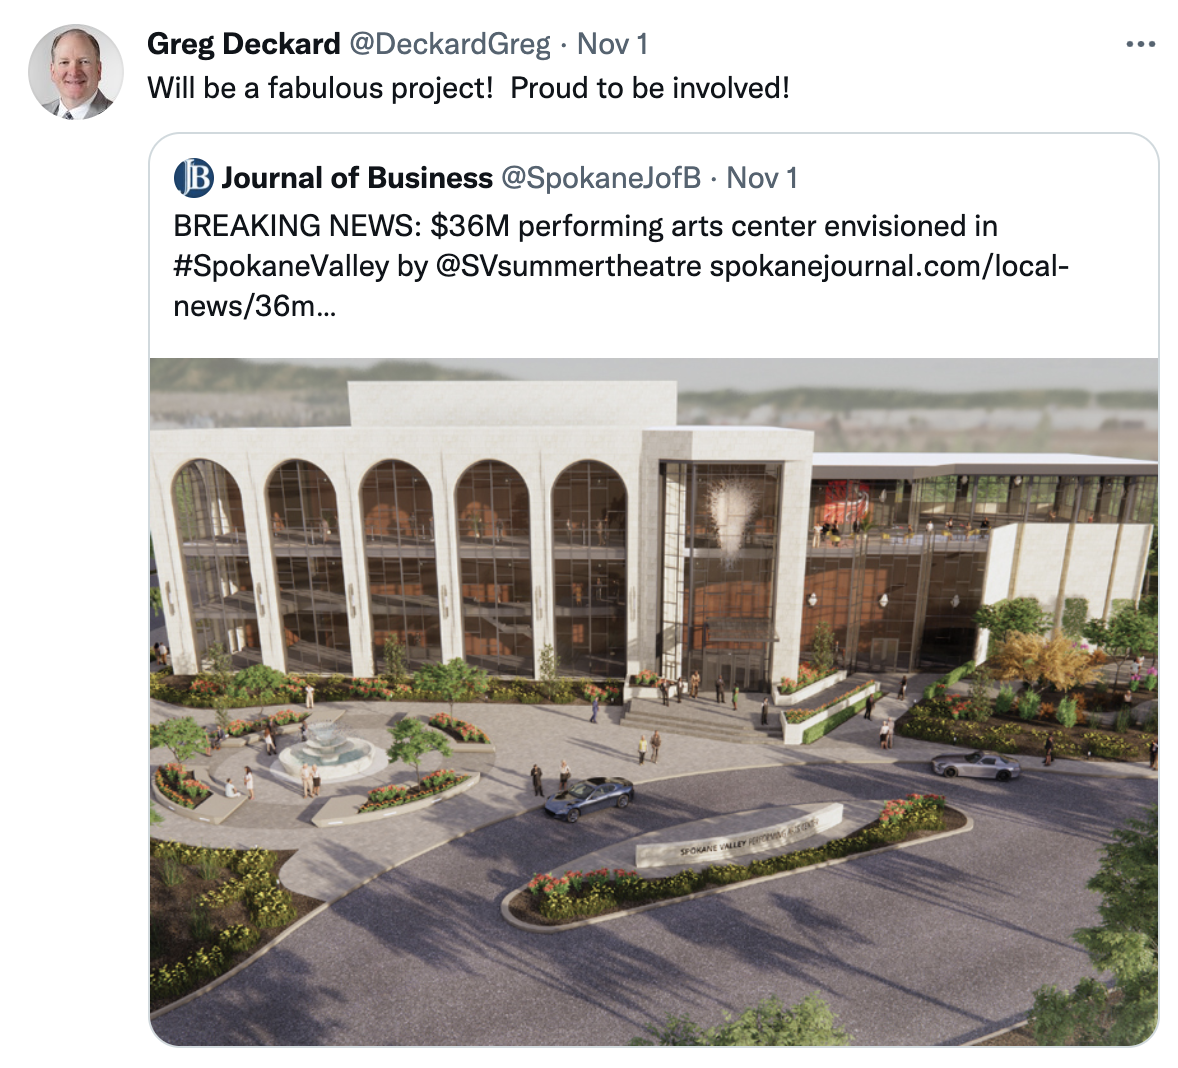 Screenshot of a tweet from Greg Deckard about the new performing arts center